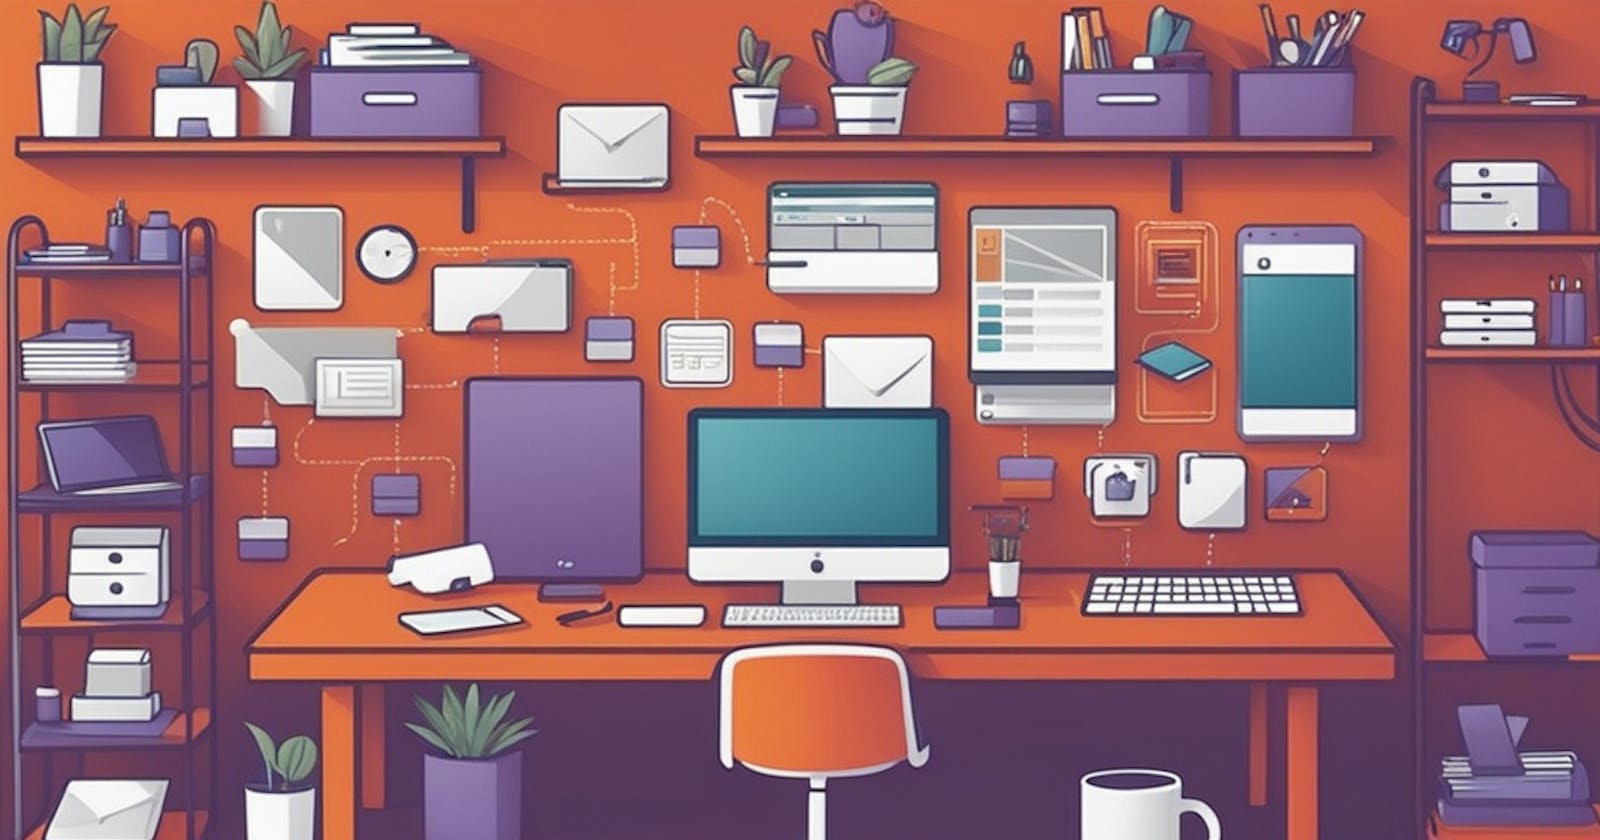 Creating and Managing Workspaces in Ubuntu: A Guide